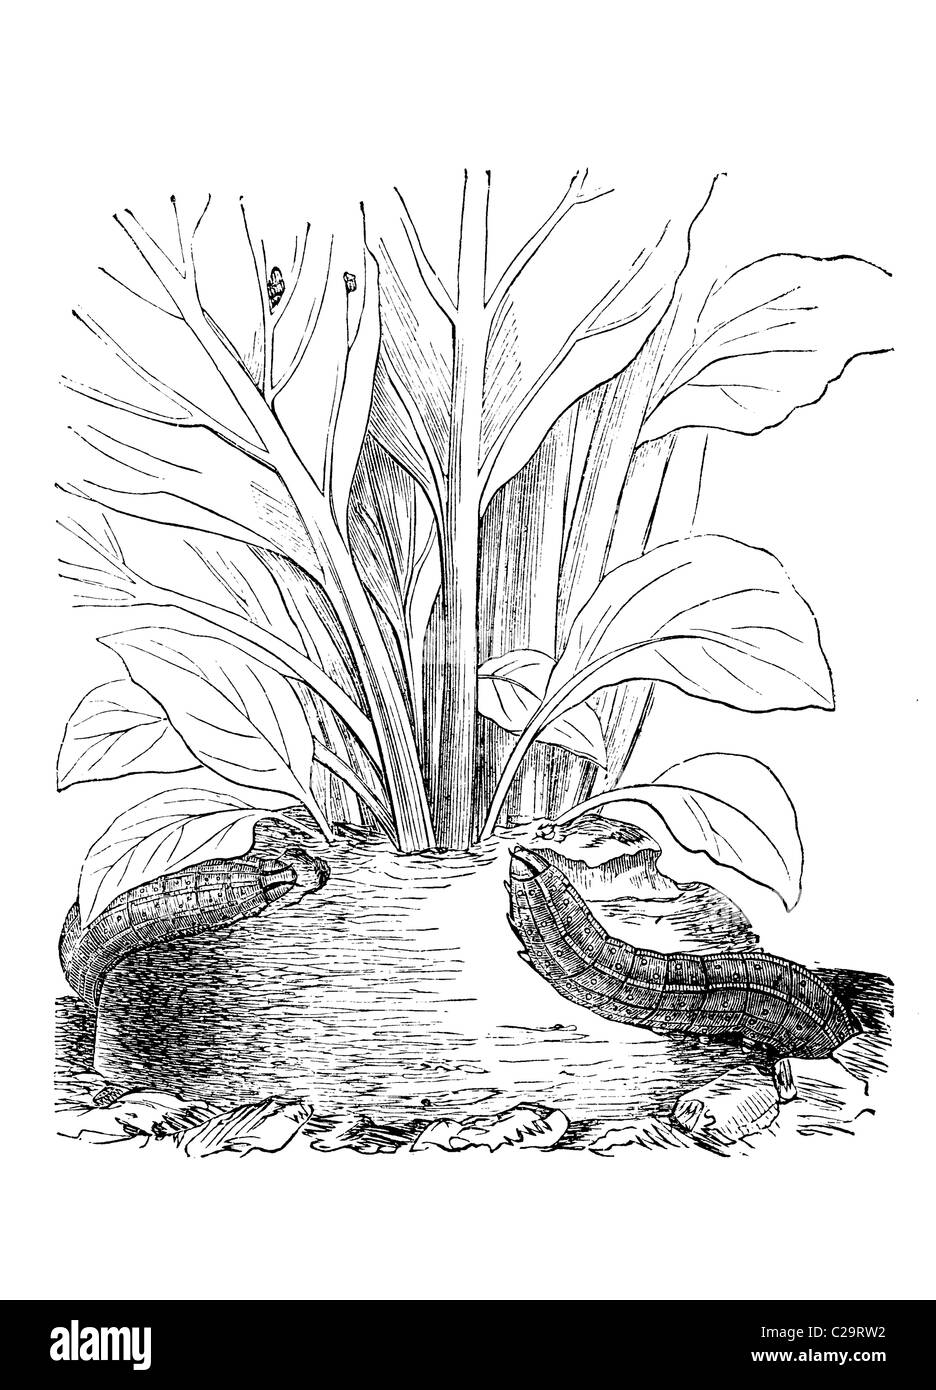 Caterpillars of Agrots segetum, the Turnip Moth, 19th century illustration Stock Photo